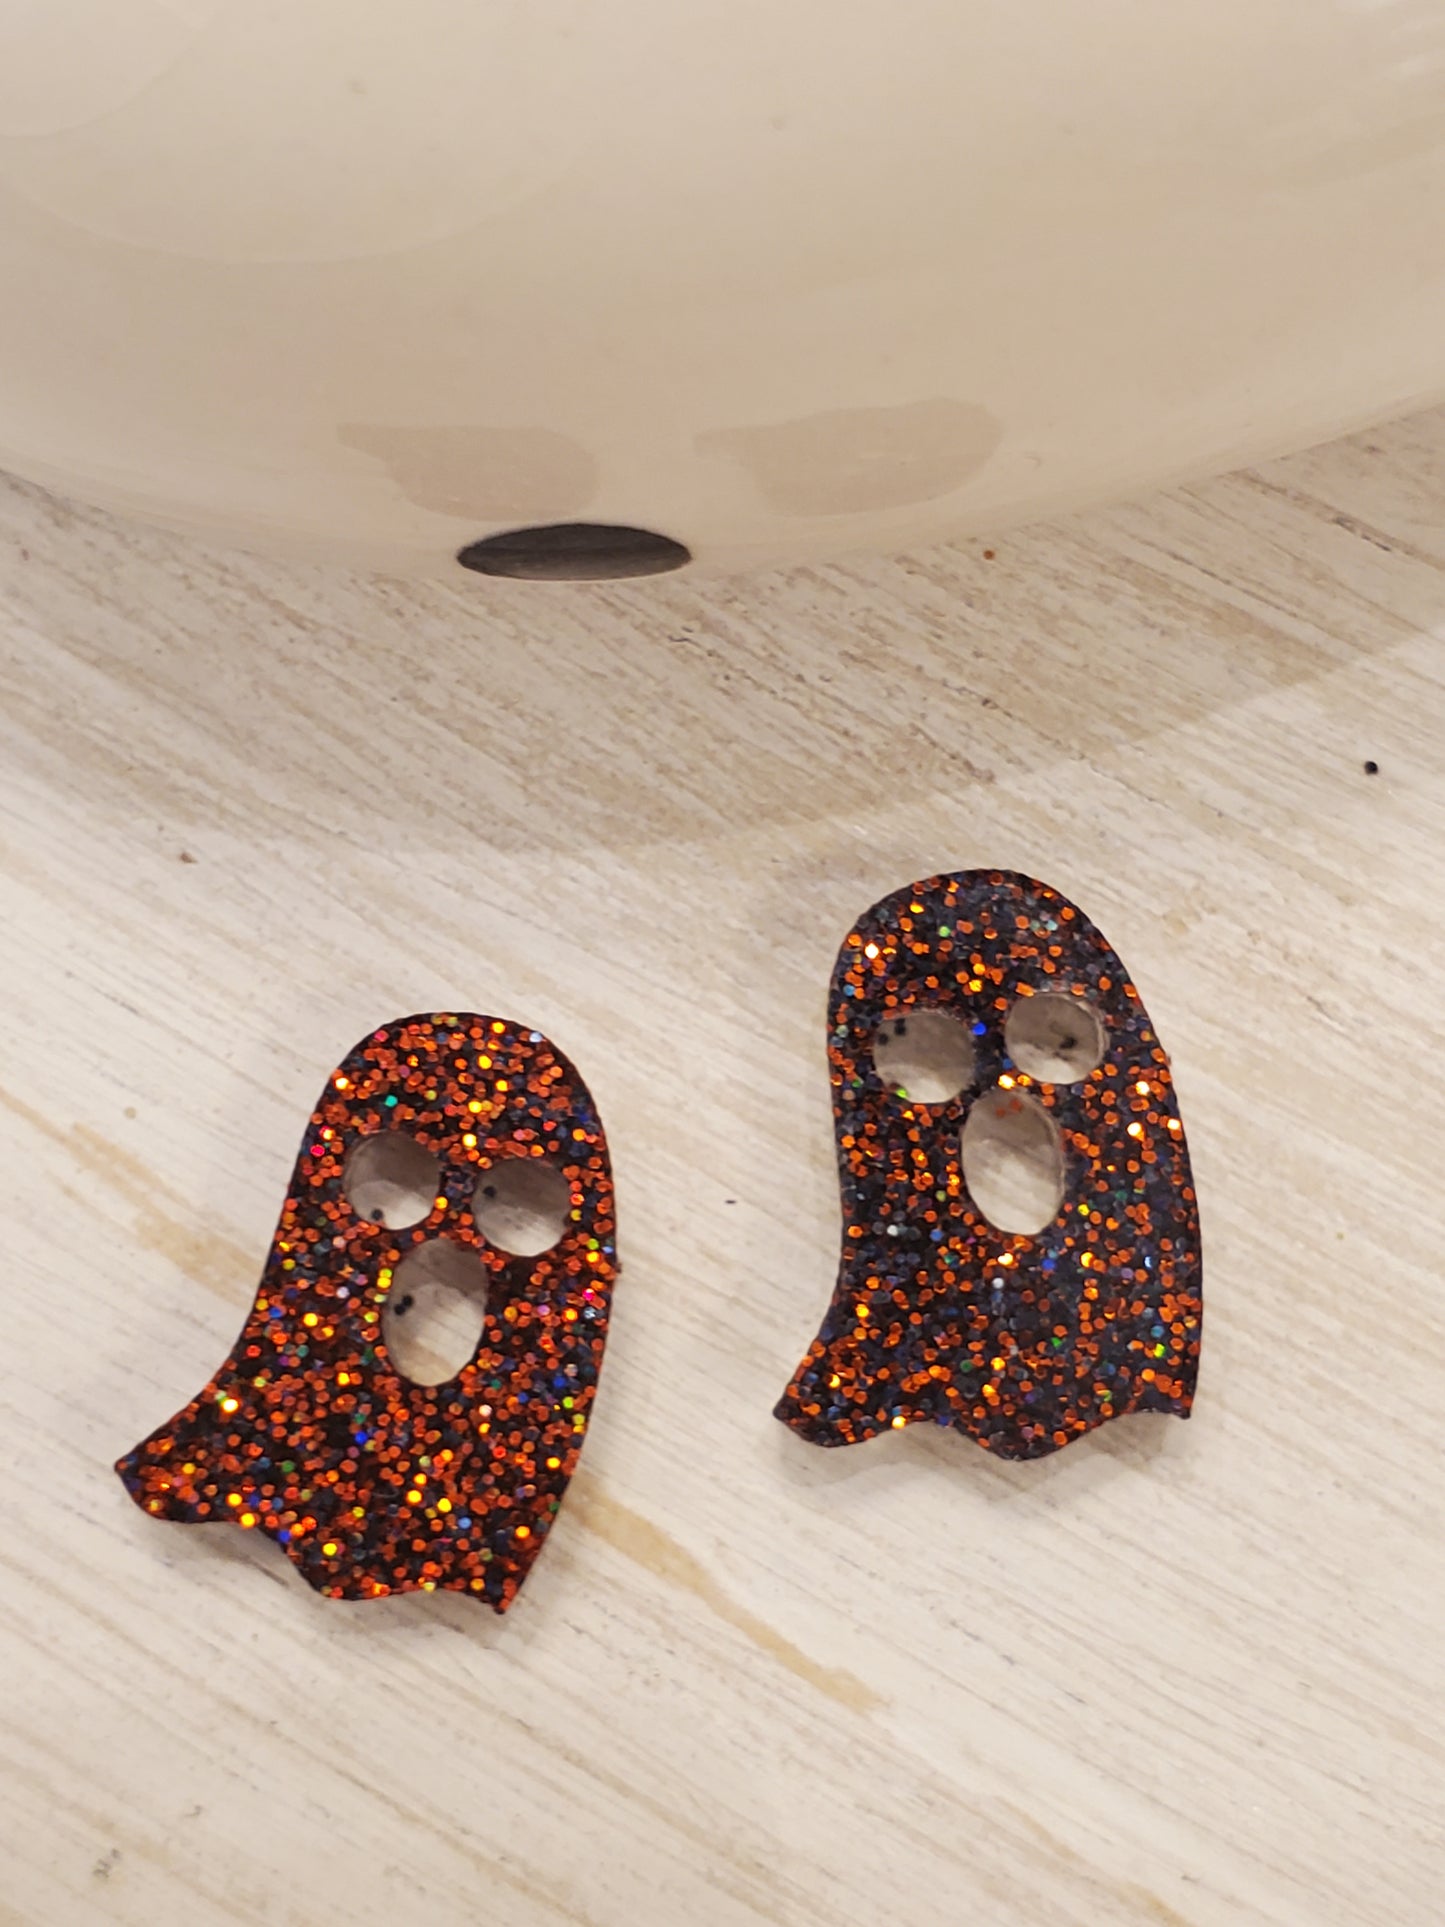 Handmade resin and glitter Ghost Orange earrings small studs